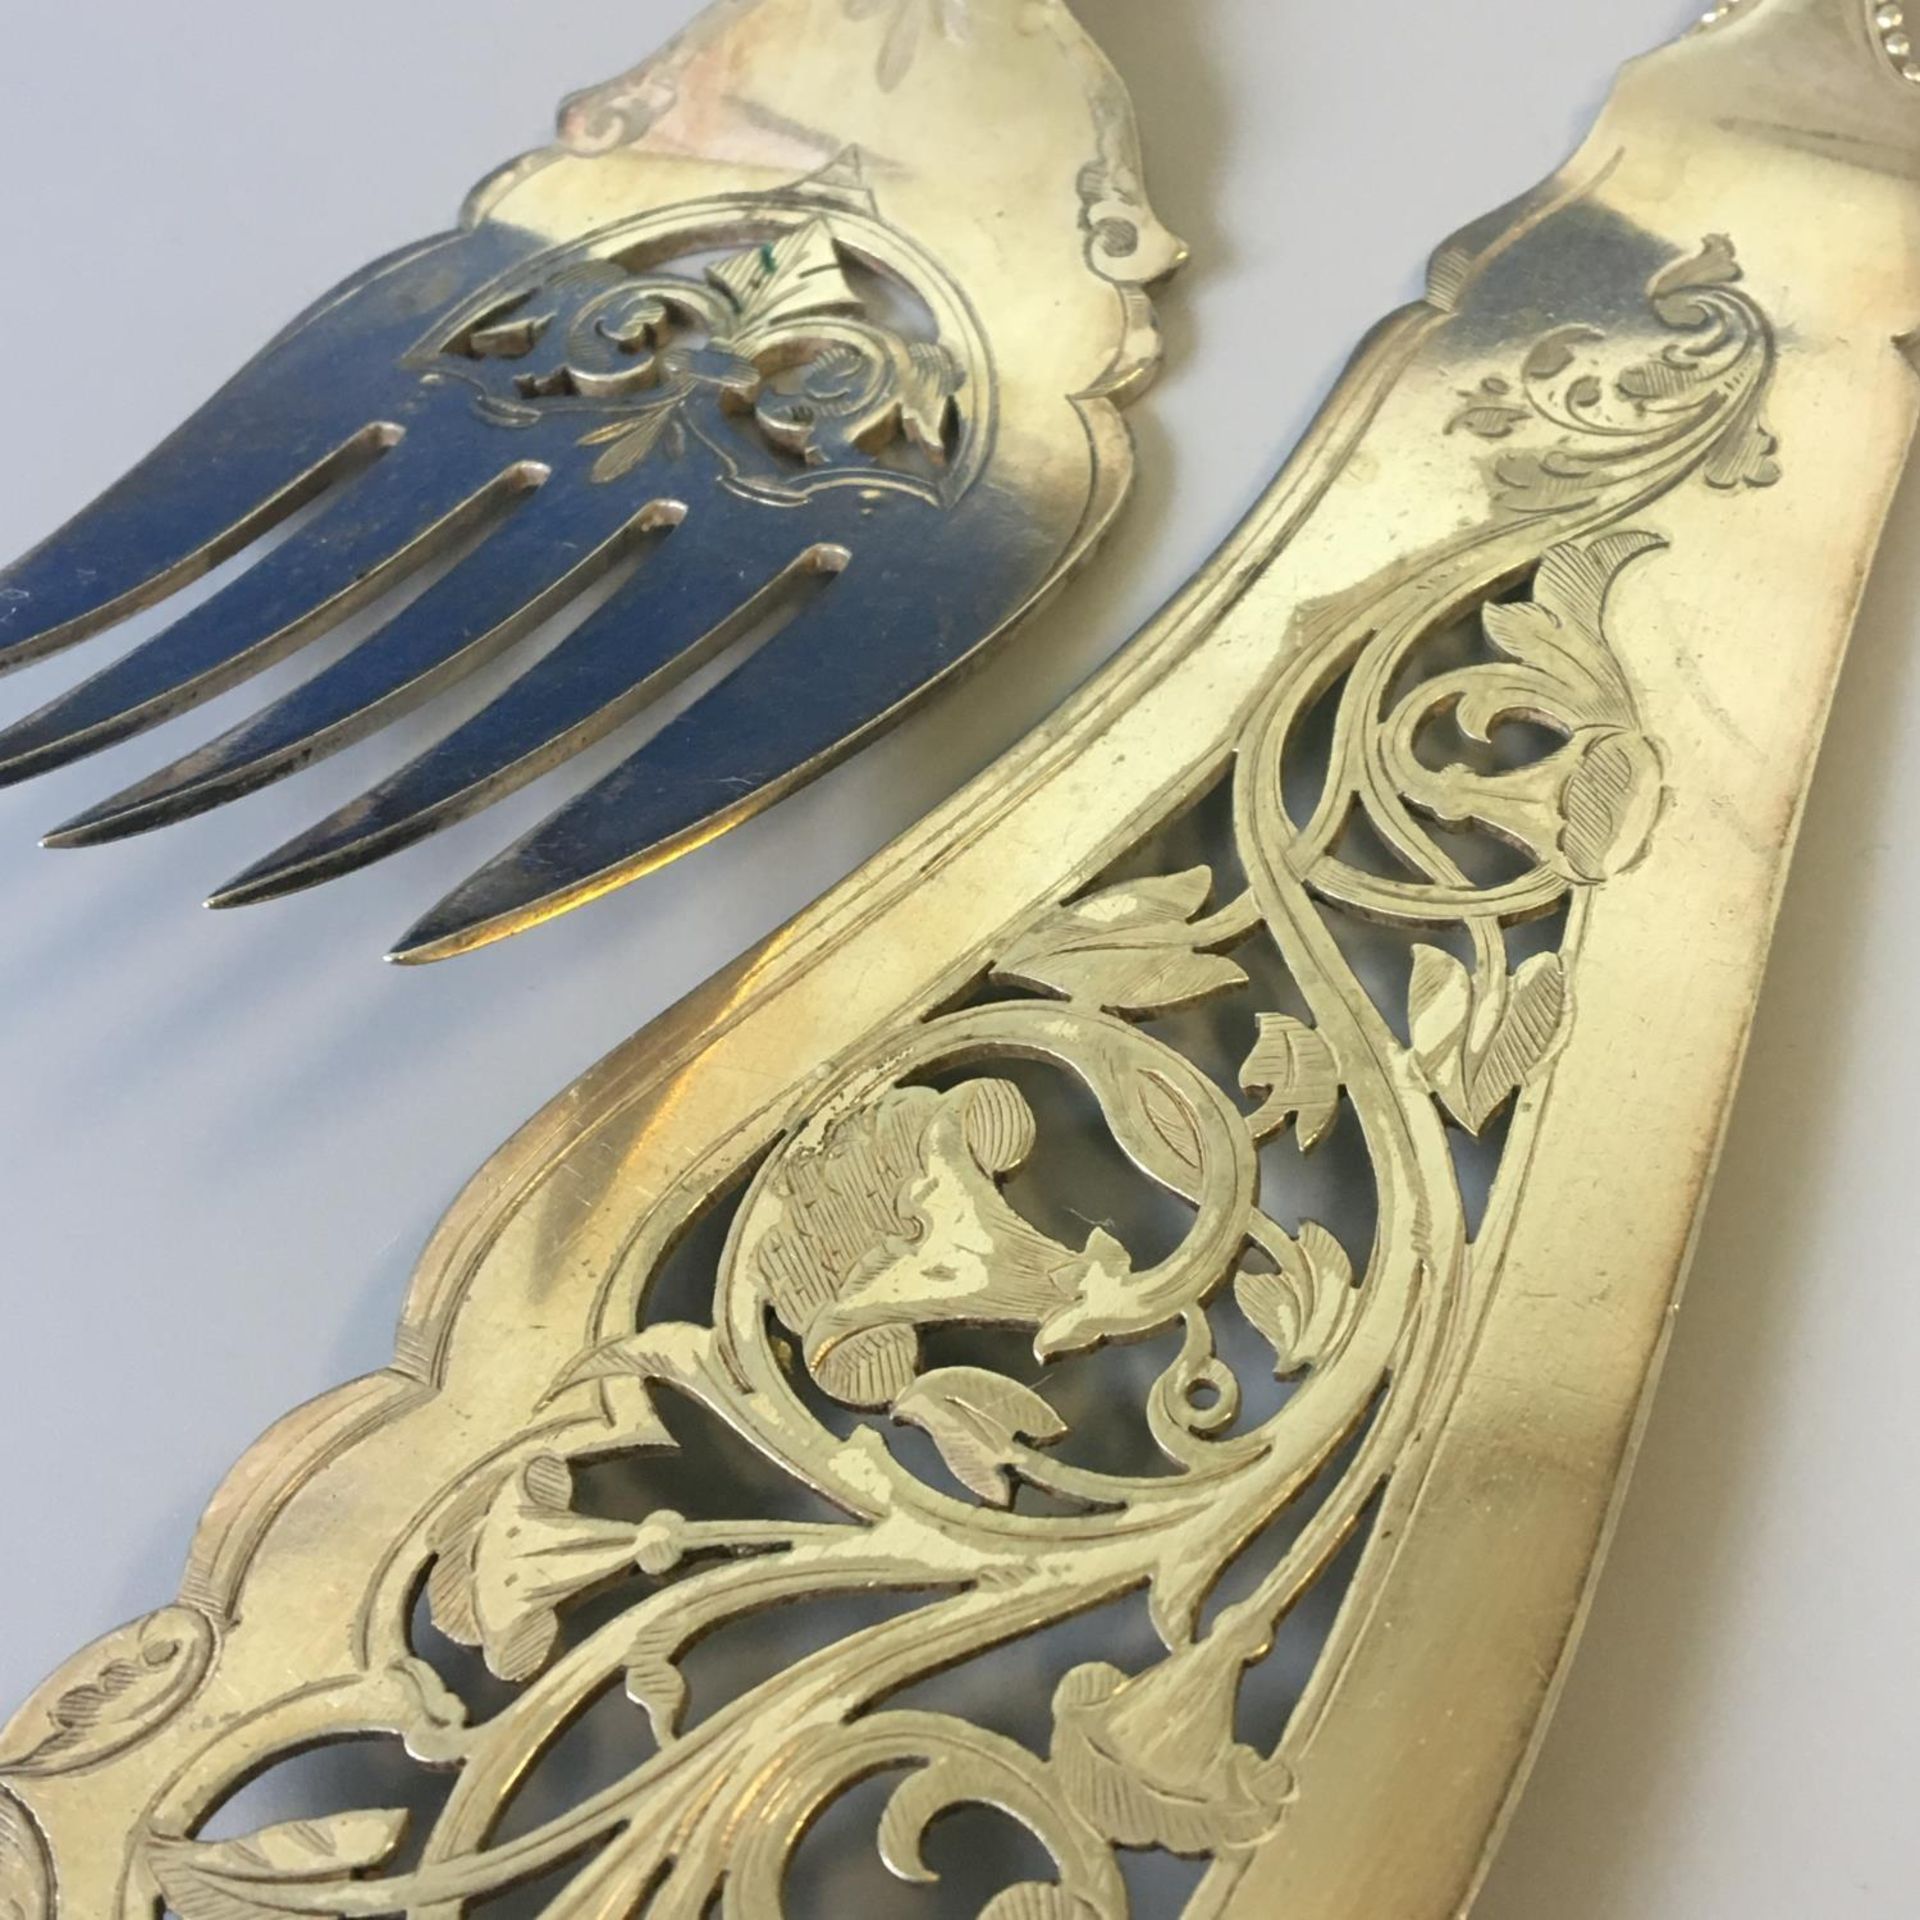 Superb Art Nouveau Silver Plate Serving Cutlery - Roberts & Belk Sheffield c1880